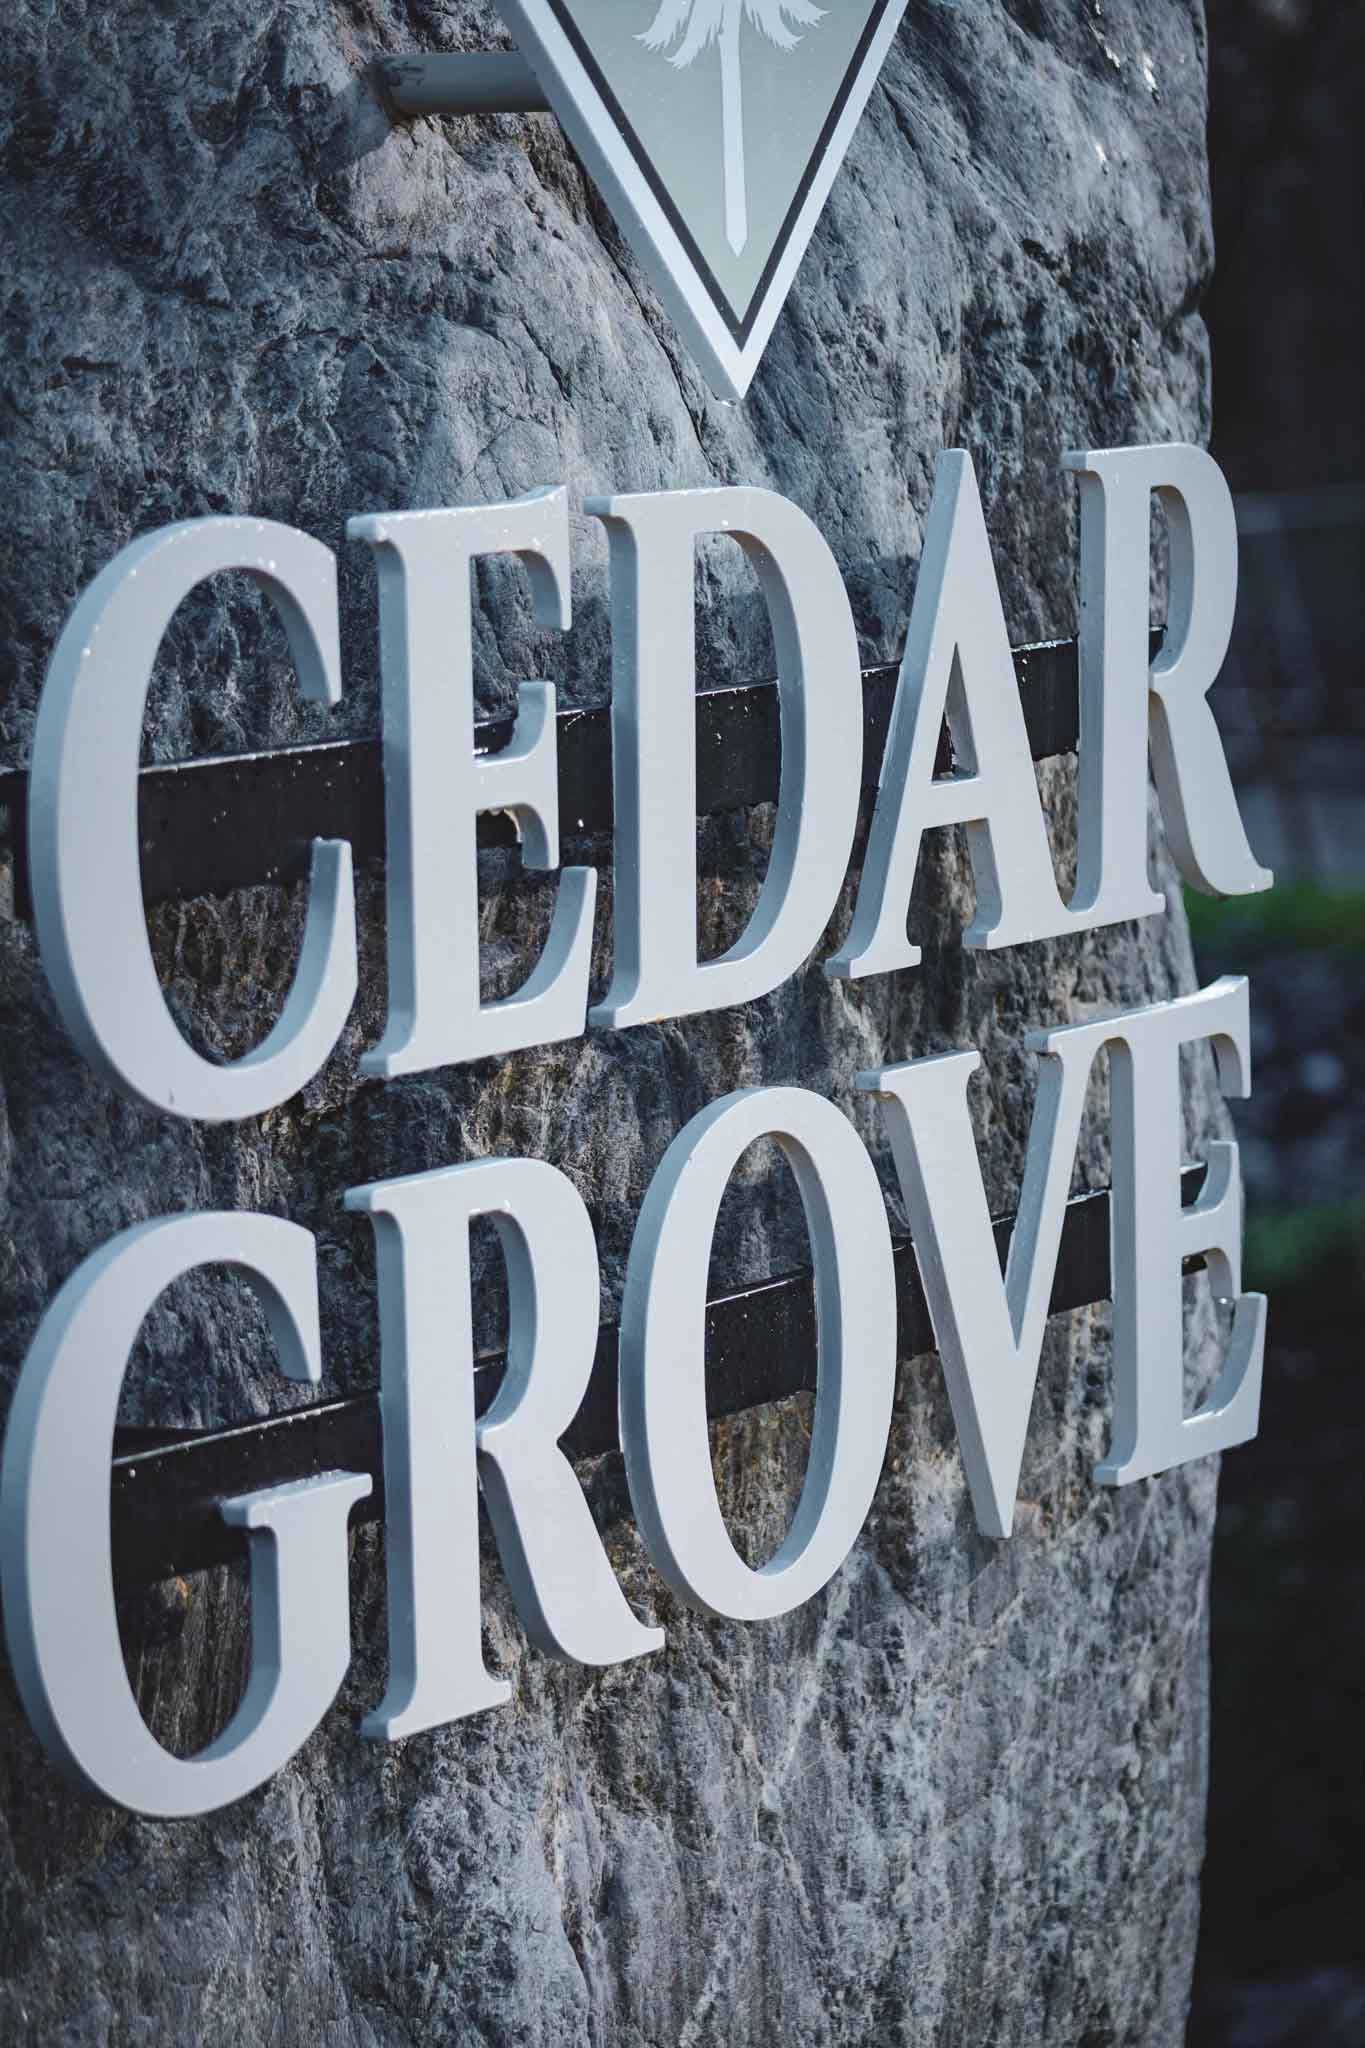 development-cedar-grove-apartments-mounted-rock-letters-closeup